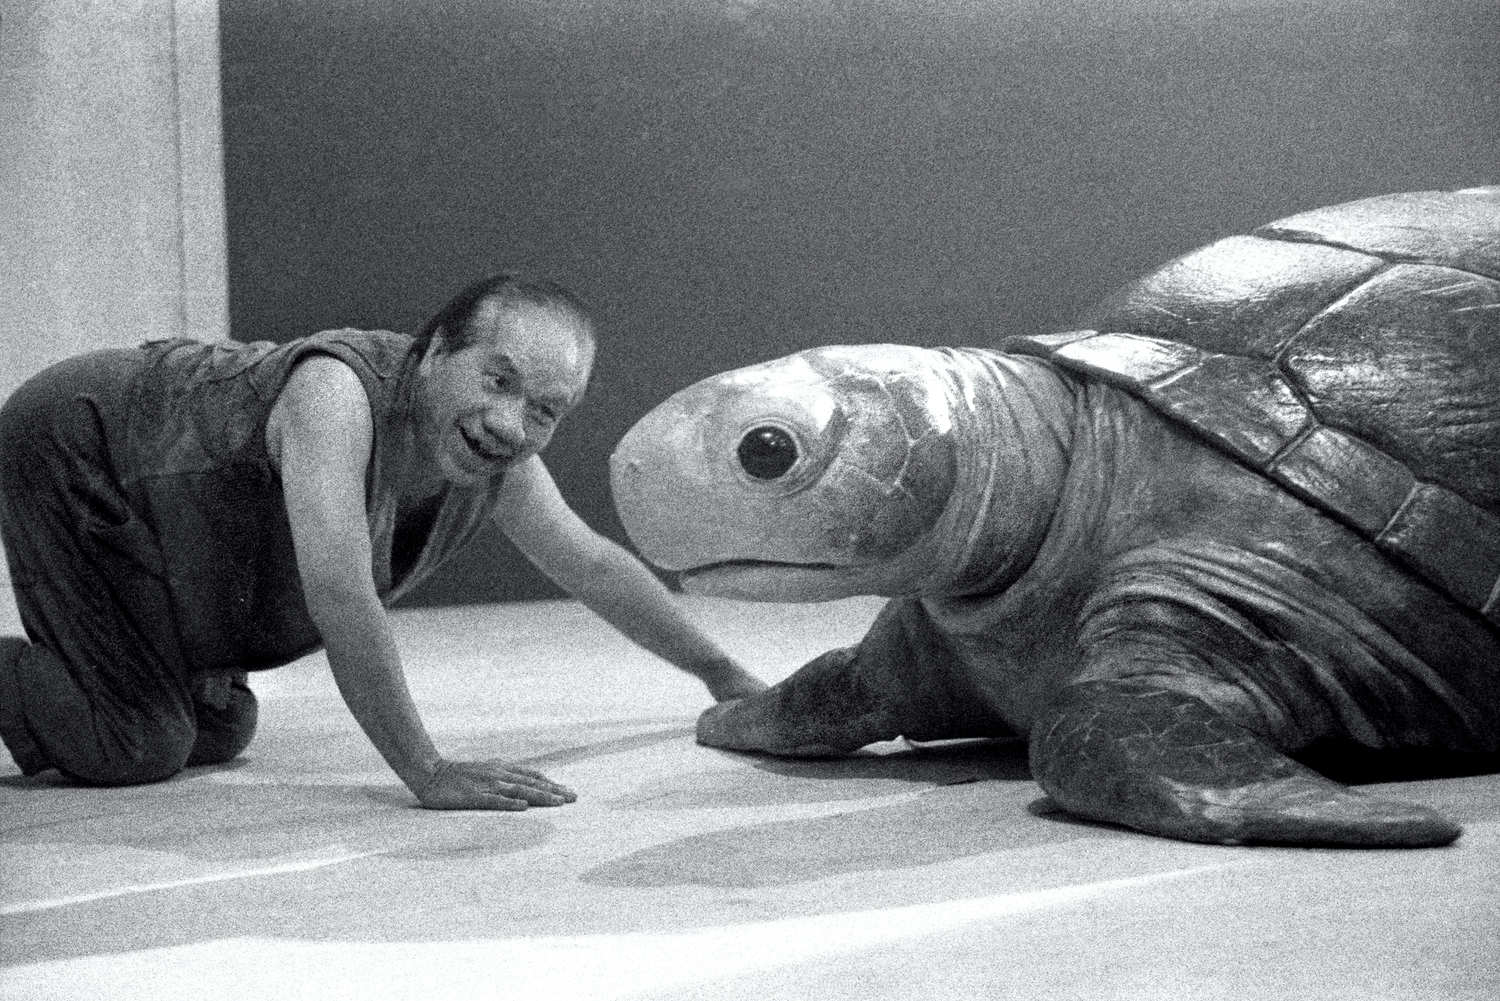 Miss Tanaka Handspan/Playbox production - man crawls towards large lifelike turtle puppet